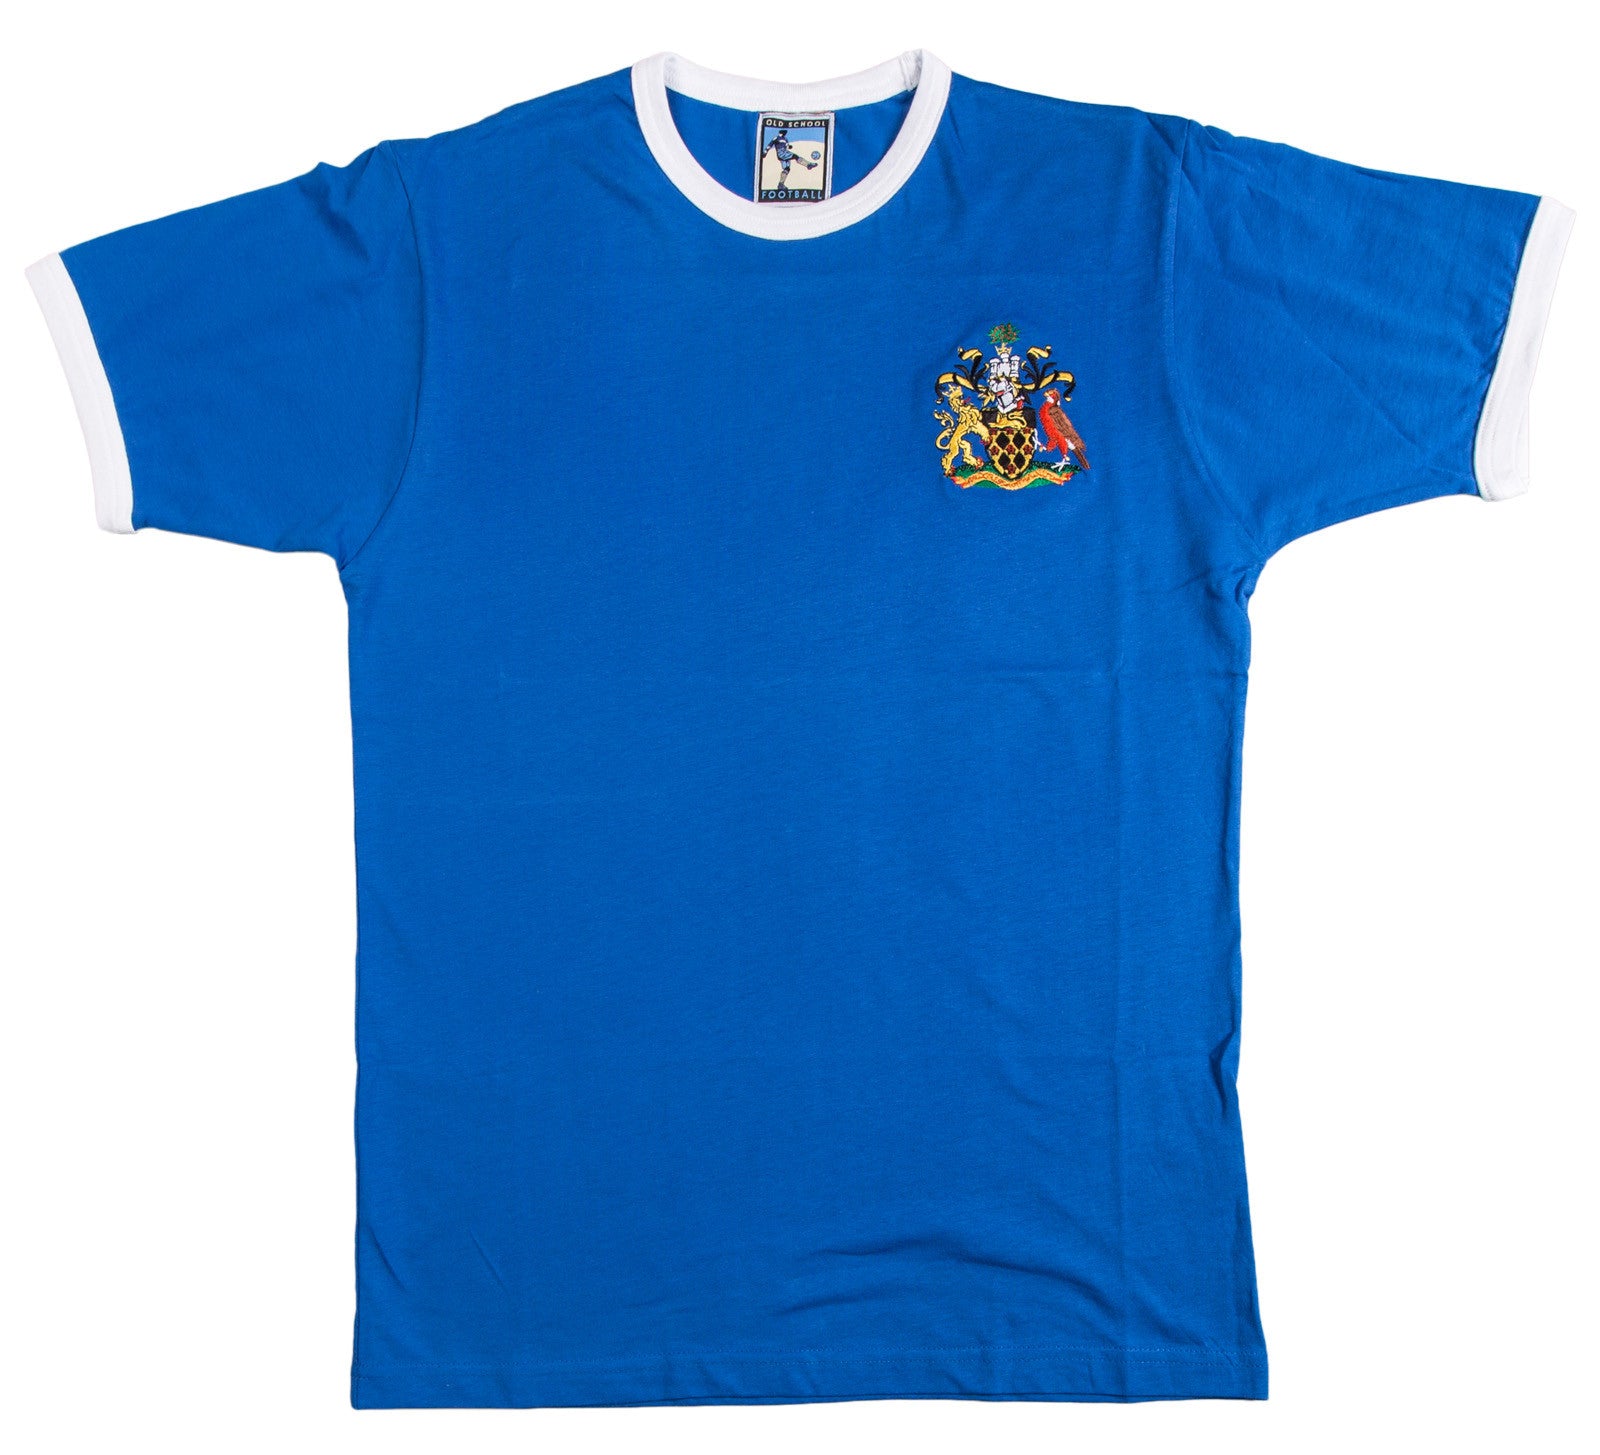 Wigan Athletic Retro Football T Shirt 1989 - 1995 - Old School Football